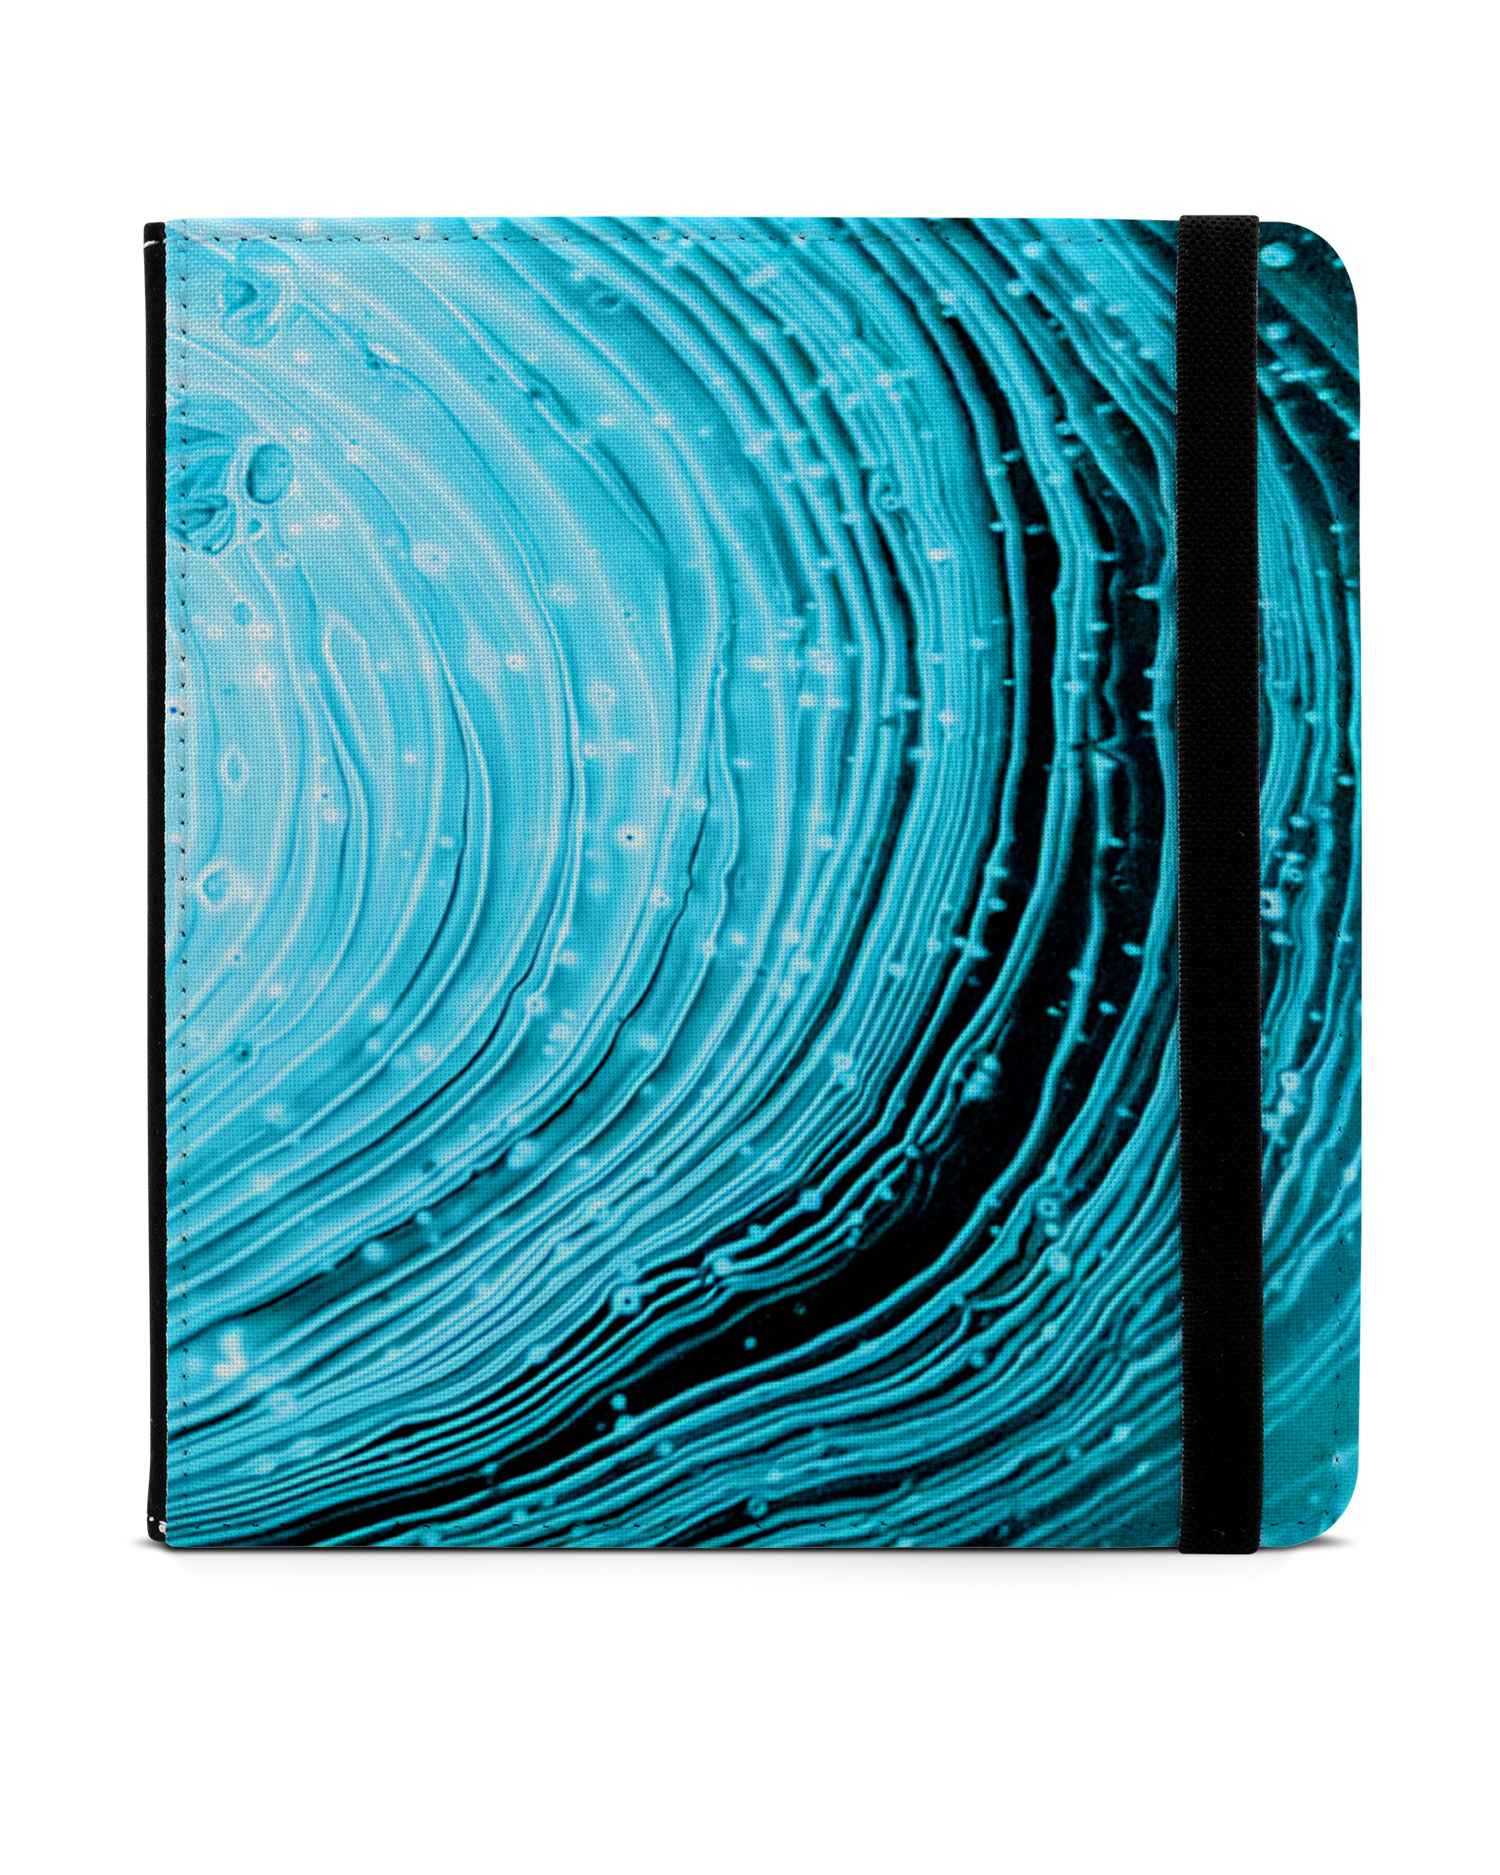 Turquoise Ripples eBook Reader Hülle für tolino vision 6: Frontansicht